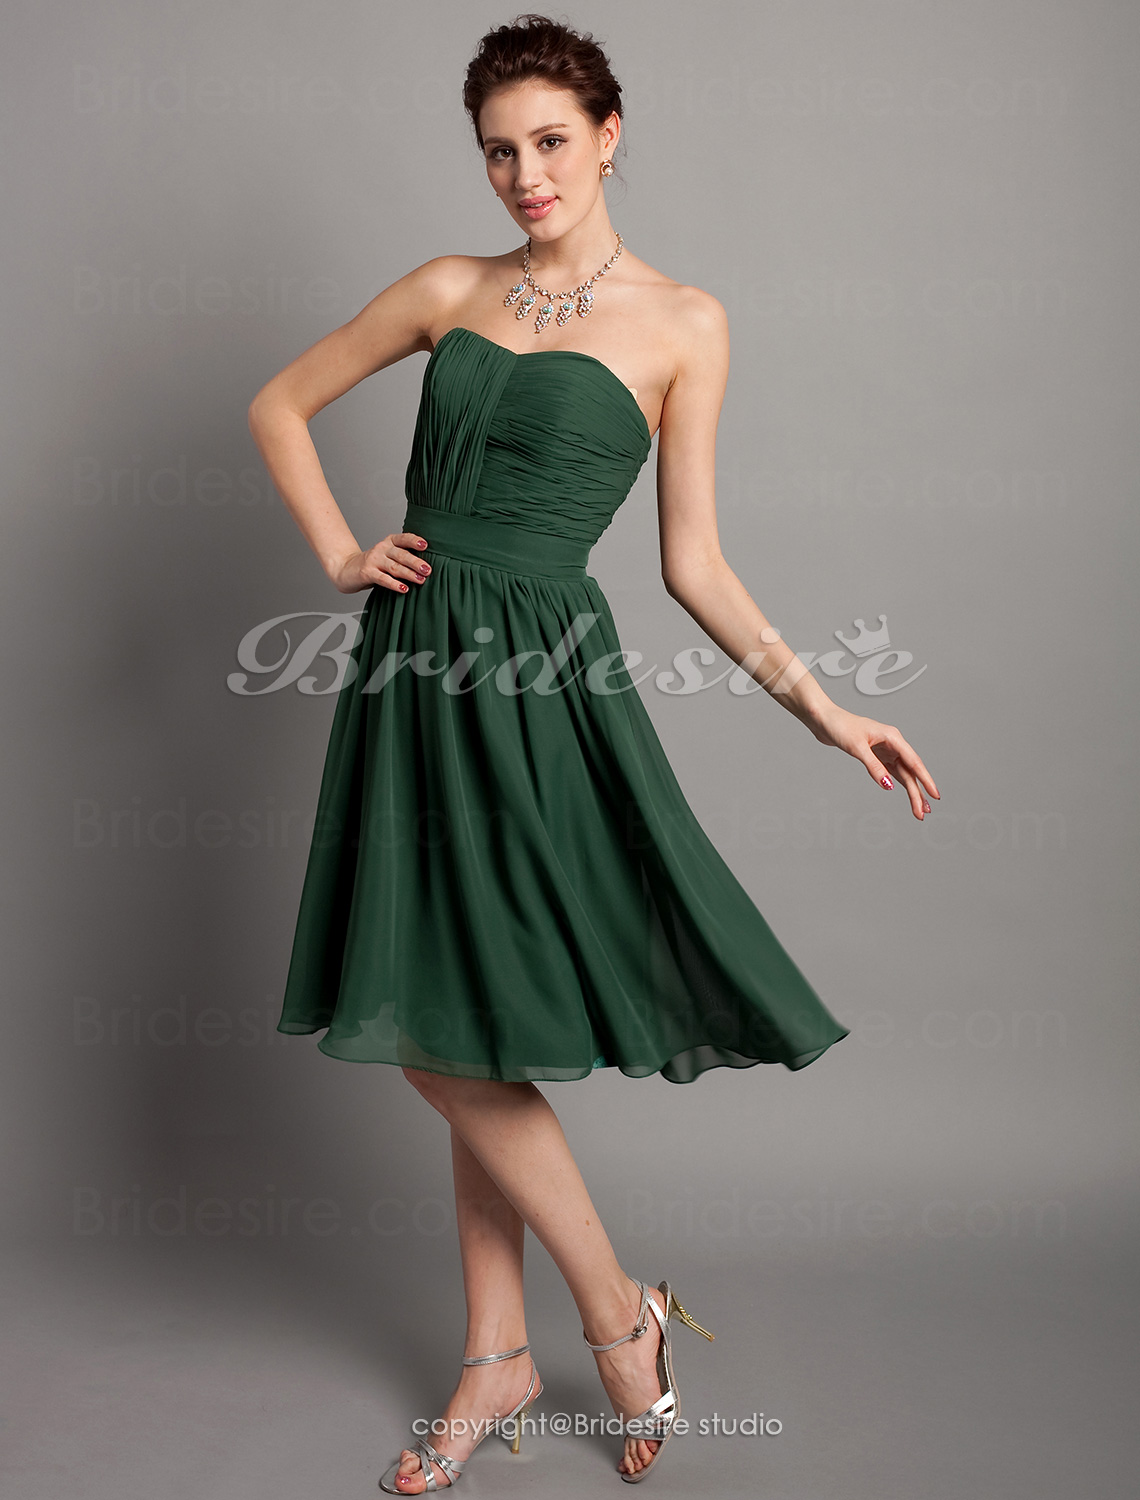 A-line Princess Chiffon Knee-length Sweetheart Strapless Bridesmaid Dress